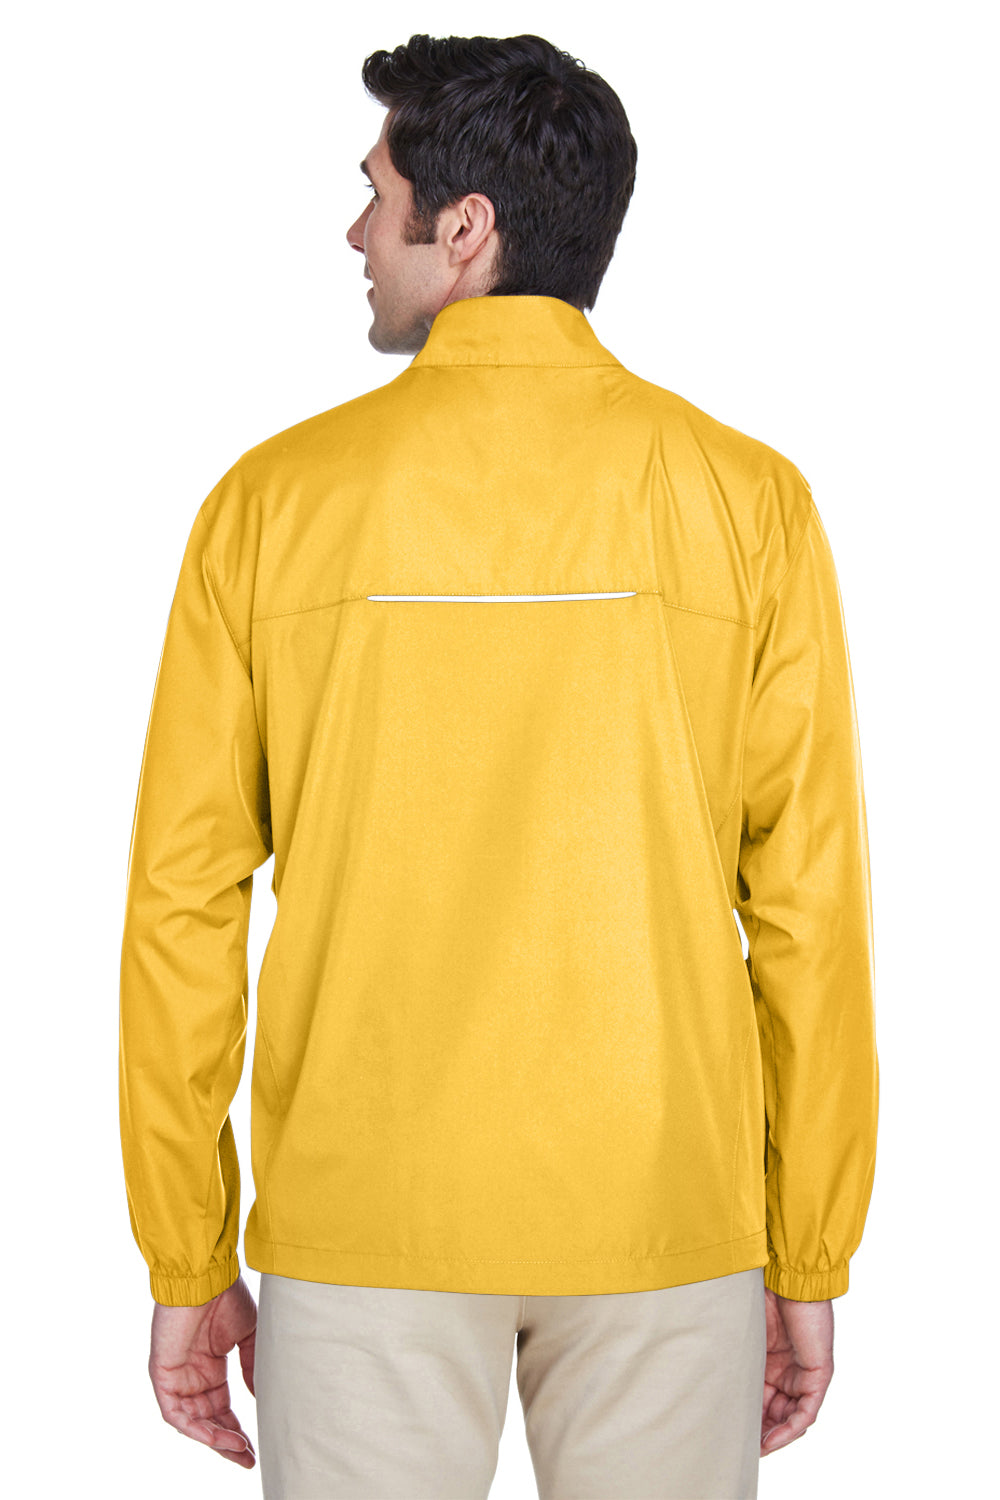 Core 365 88183 Mens Motivate Water Resistant Full Zip Jacket Gold Back